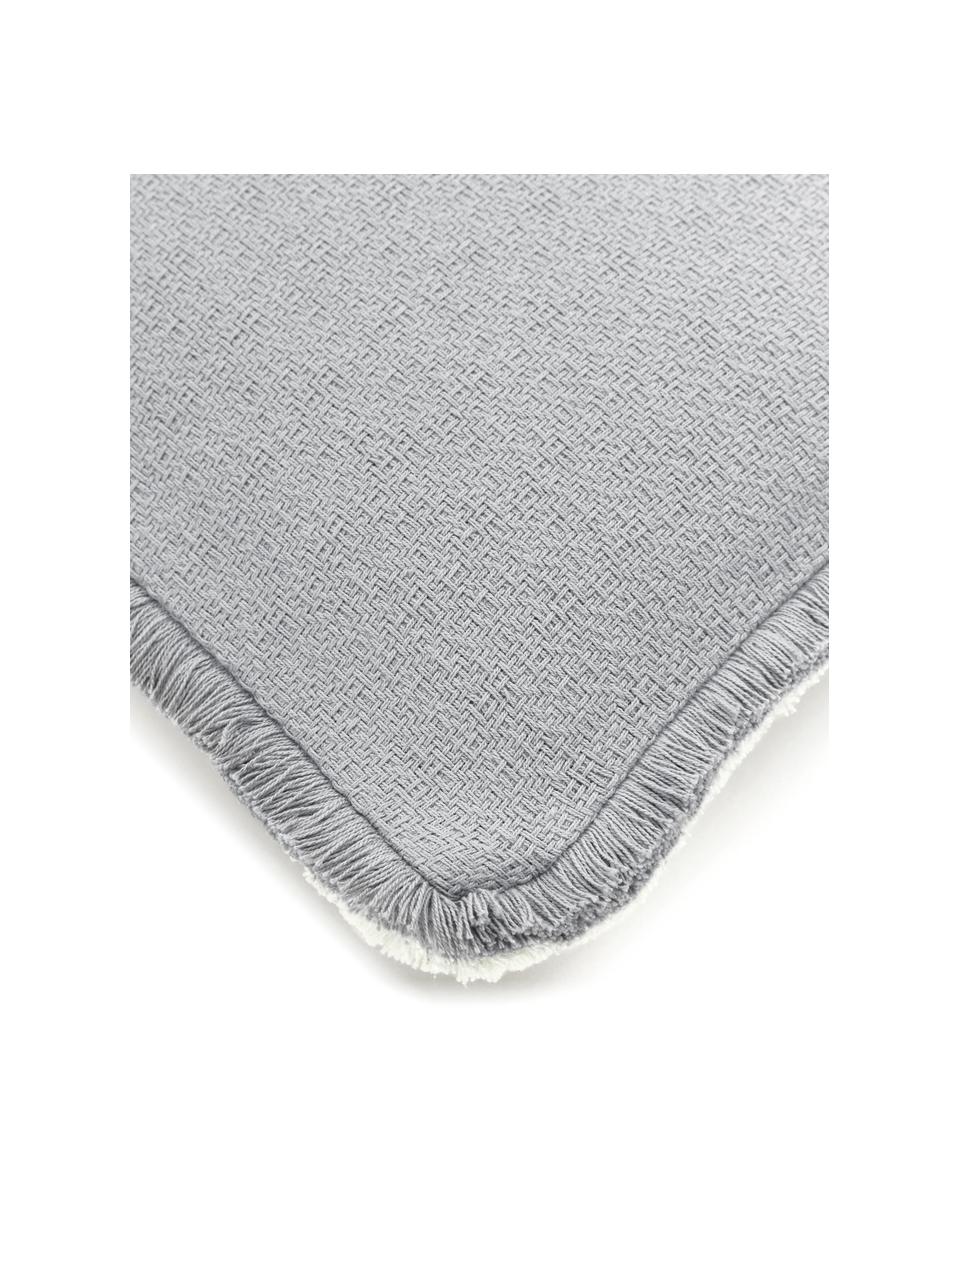 Oboustranný povlak na polštář s třásněmi Loran, 100 % bavlna, Šedá, Š 40 cm, D 40 cm